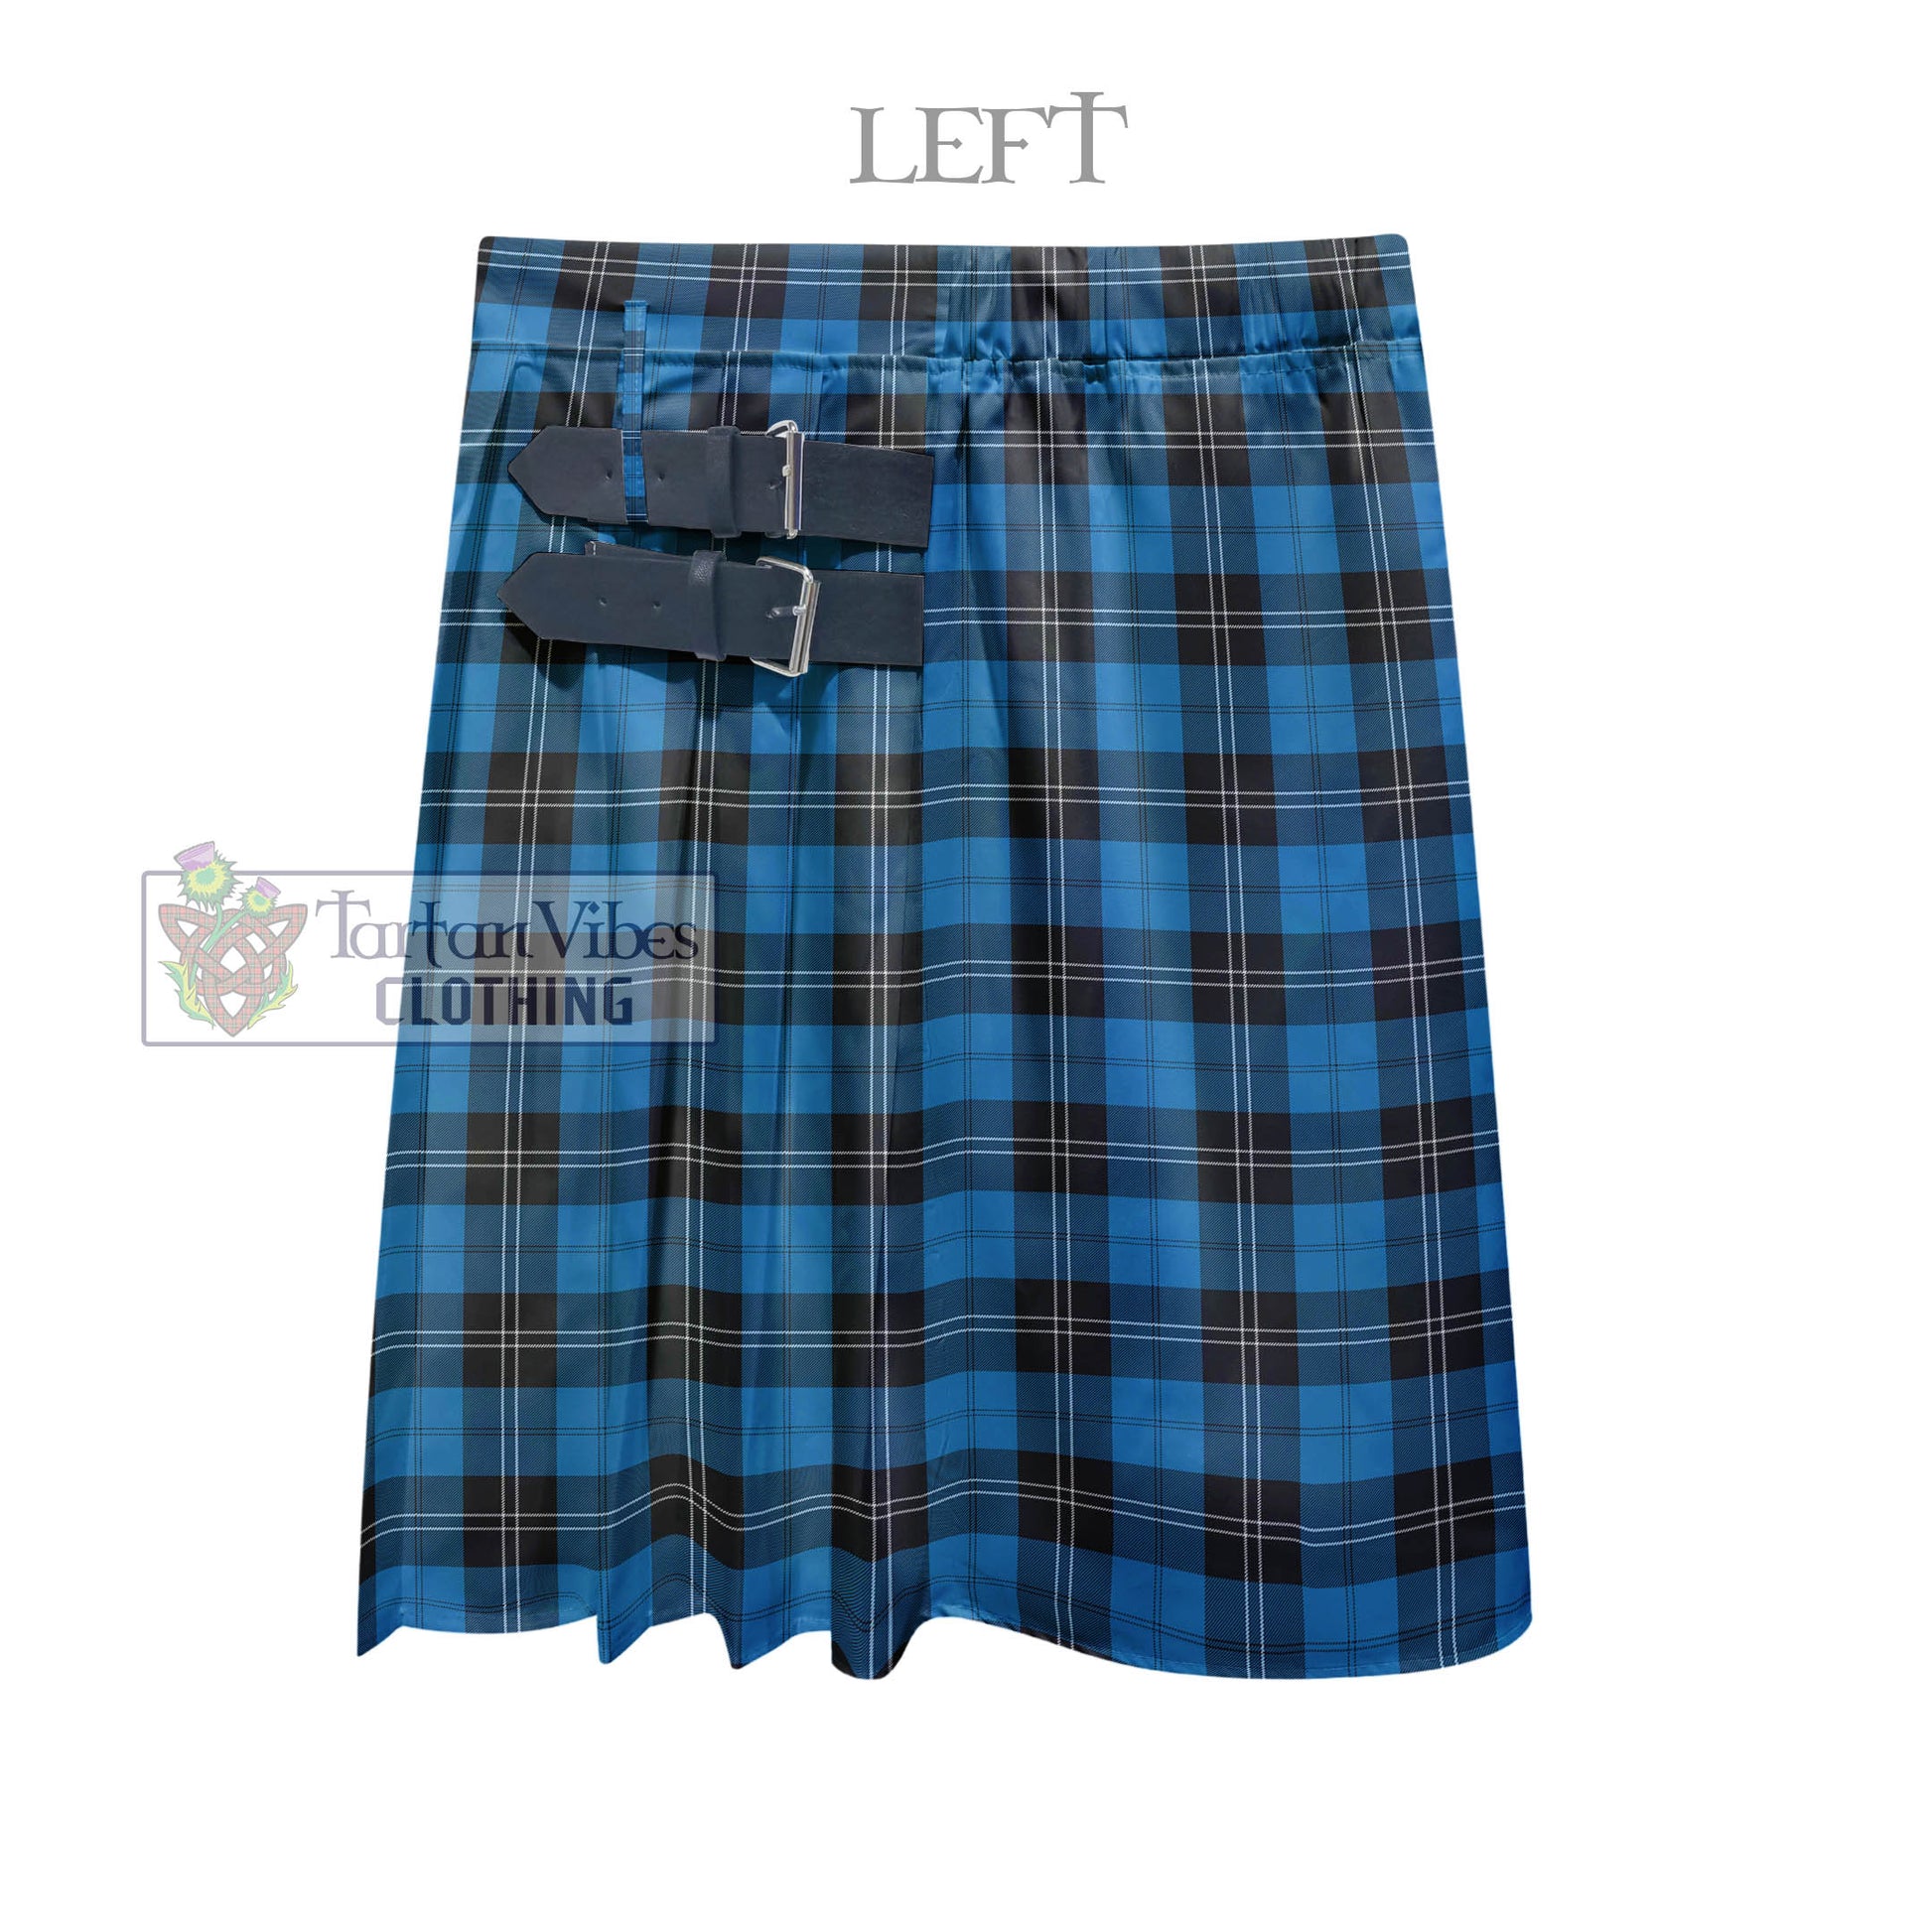 Tartan Vibes Clothing Ramsay Blue Ancient Tartan Men's Pleated Skirt - Fashion Casual Retro Scottish Style